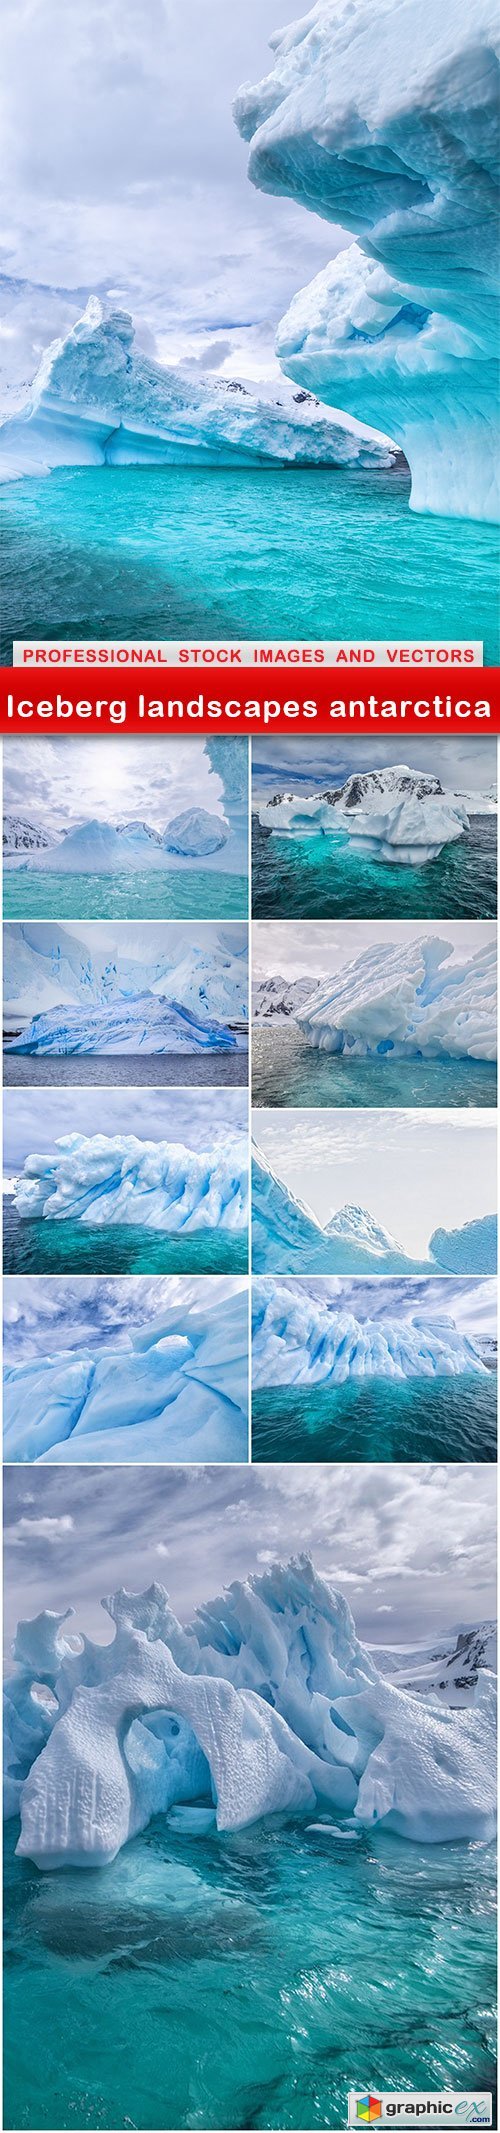 Iceberg landscapes antarctica - 10 UHQ JPEG